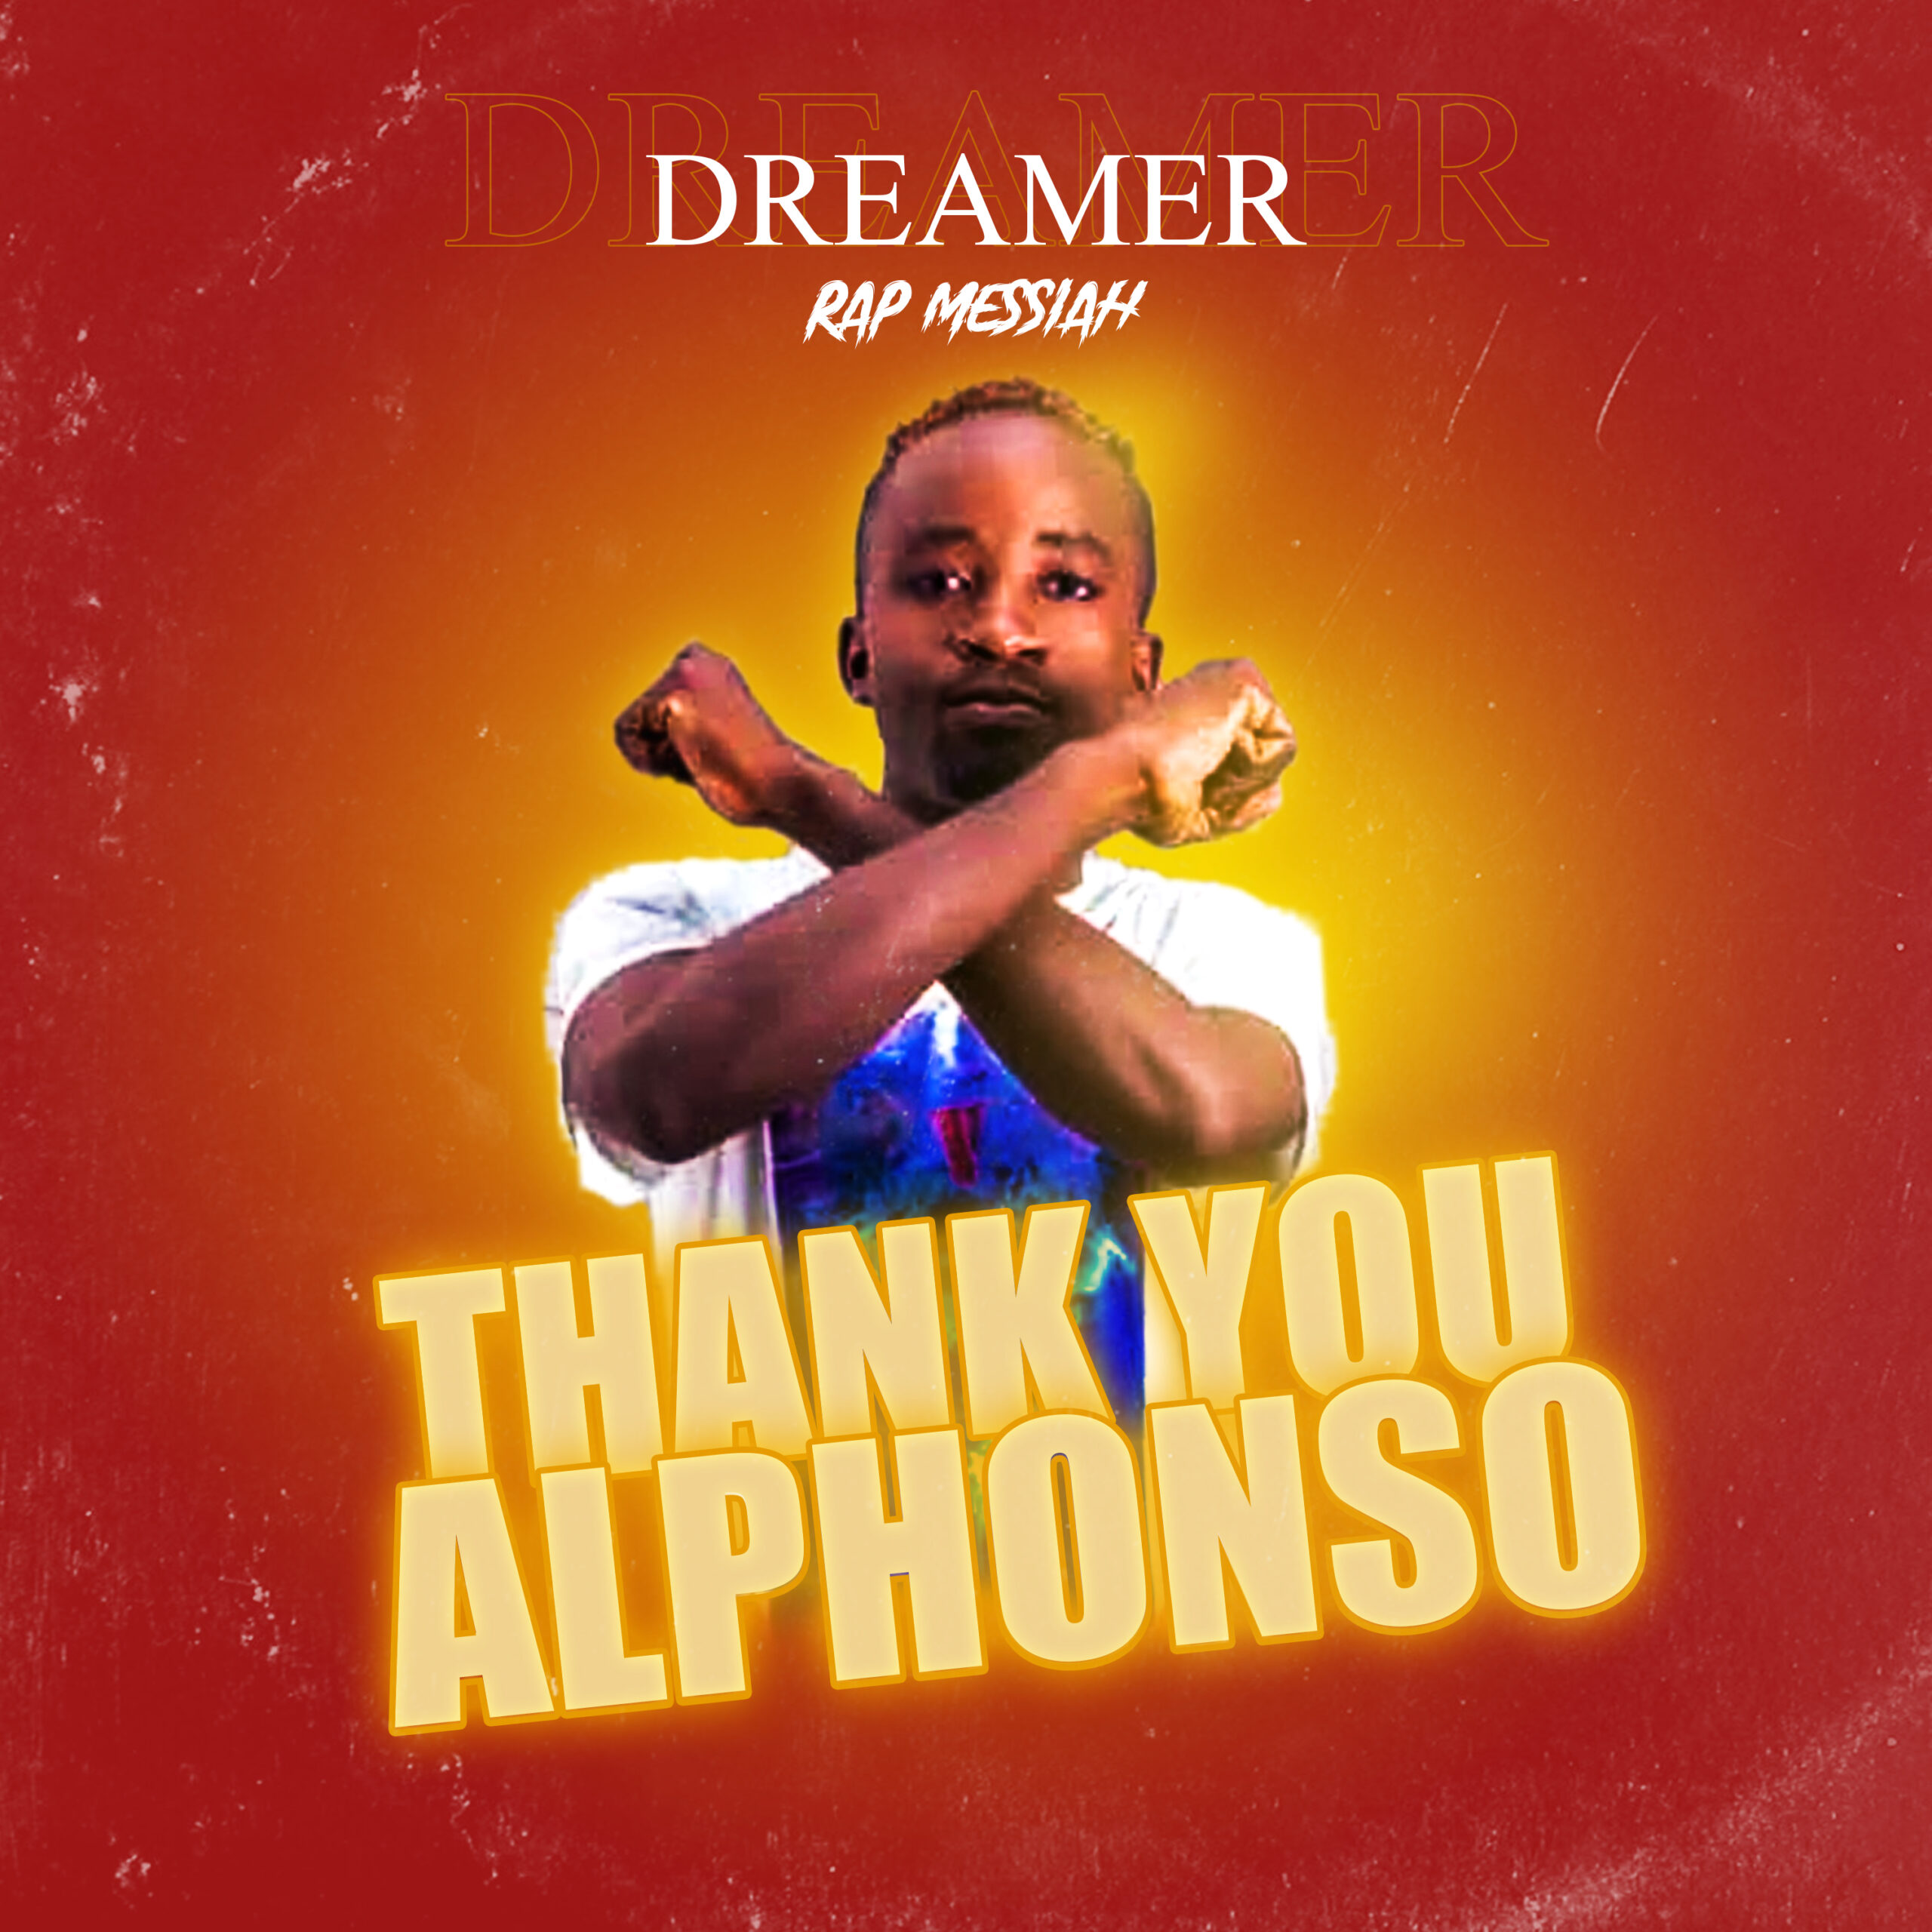 Dreamer Rapmessiah - Thank You Alphonso